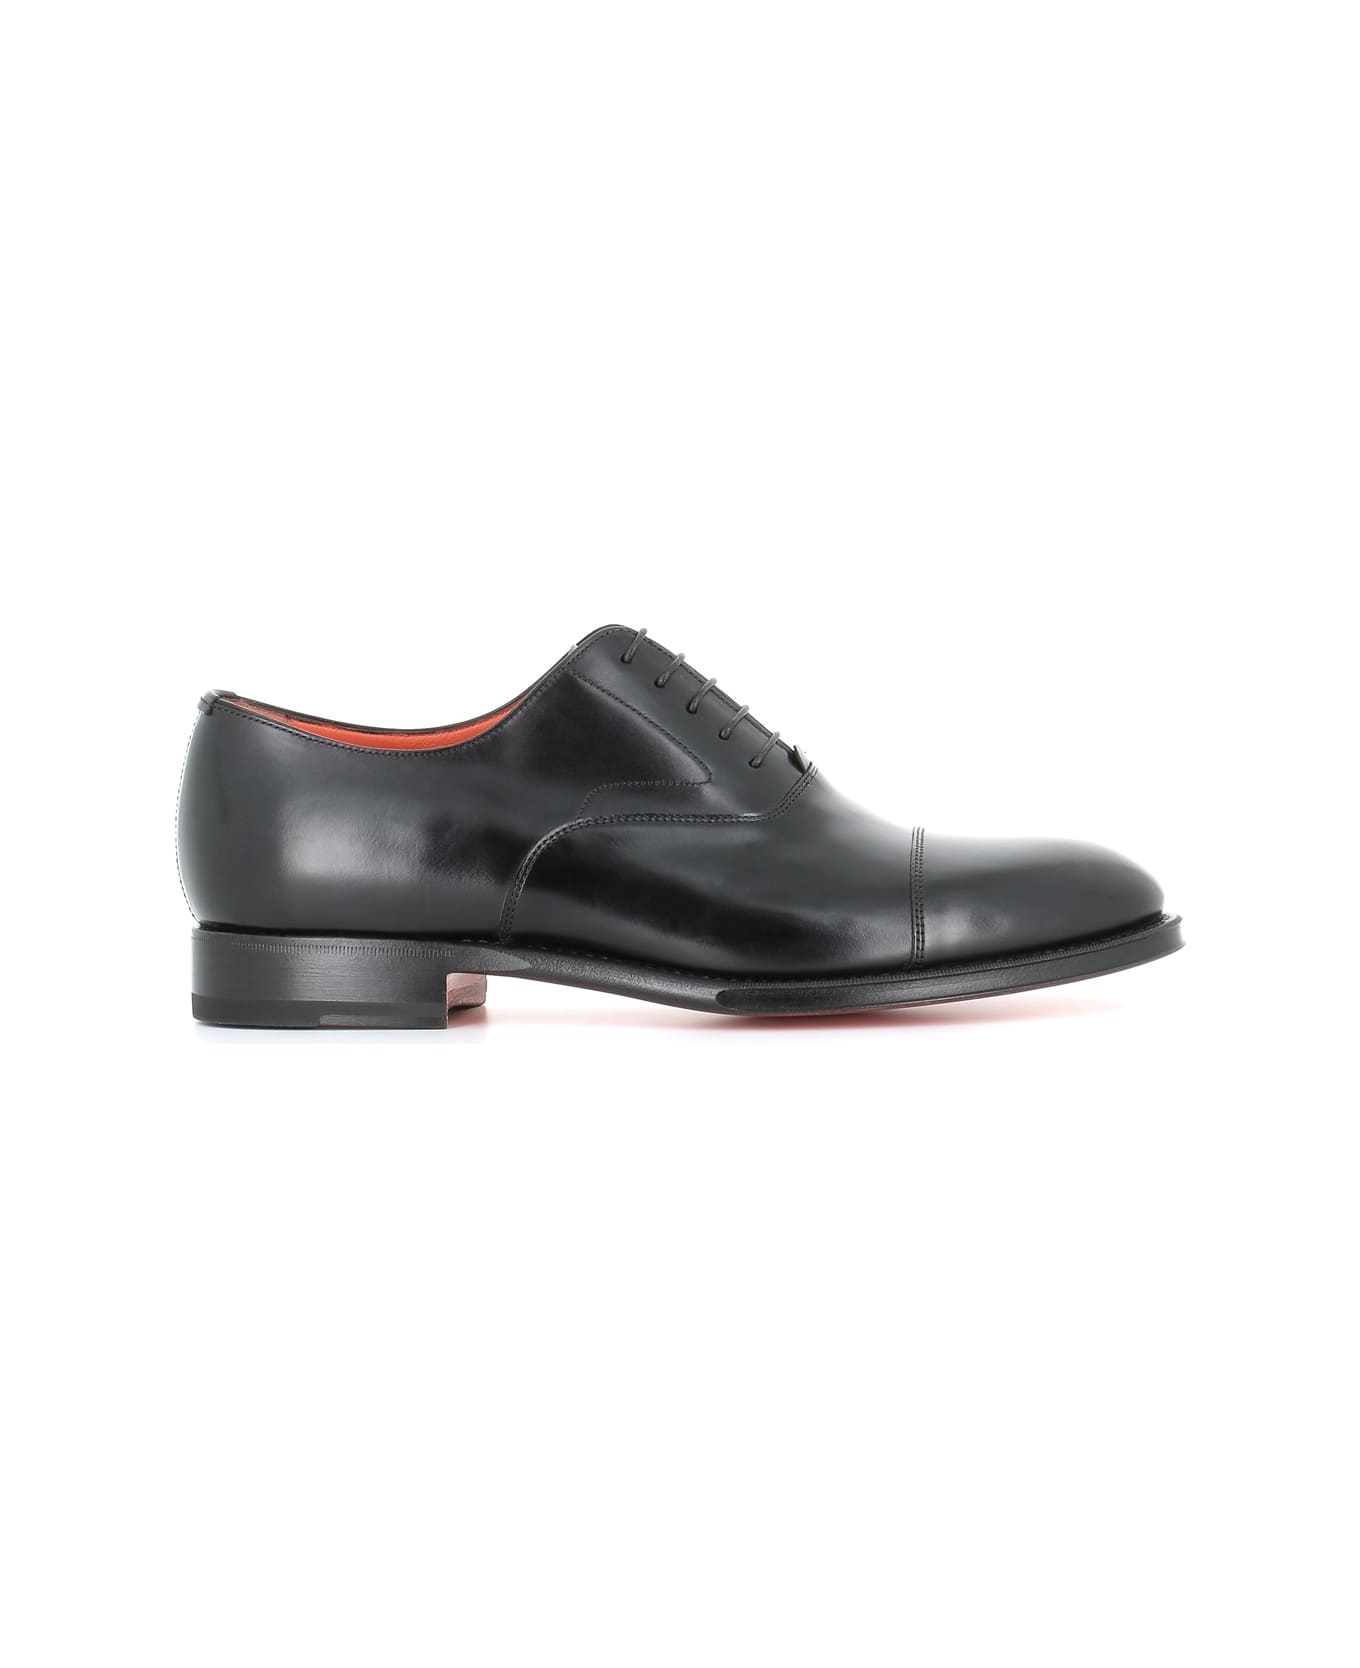 Santoni Classic Oxford Shoes - Black